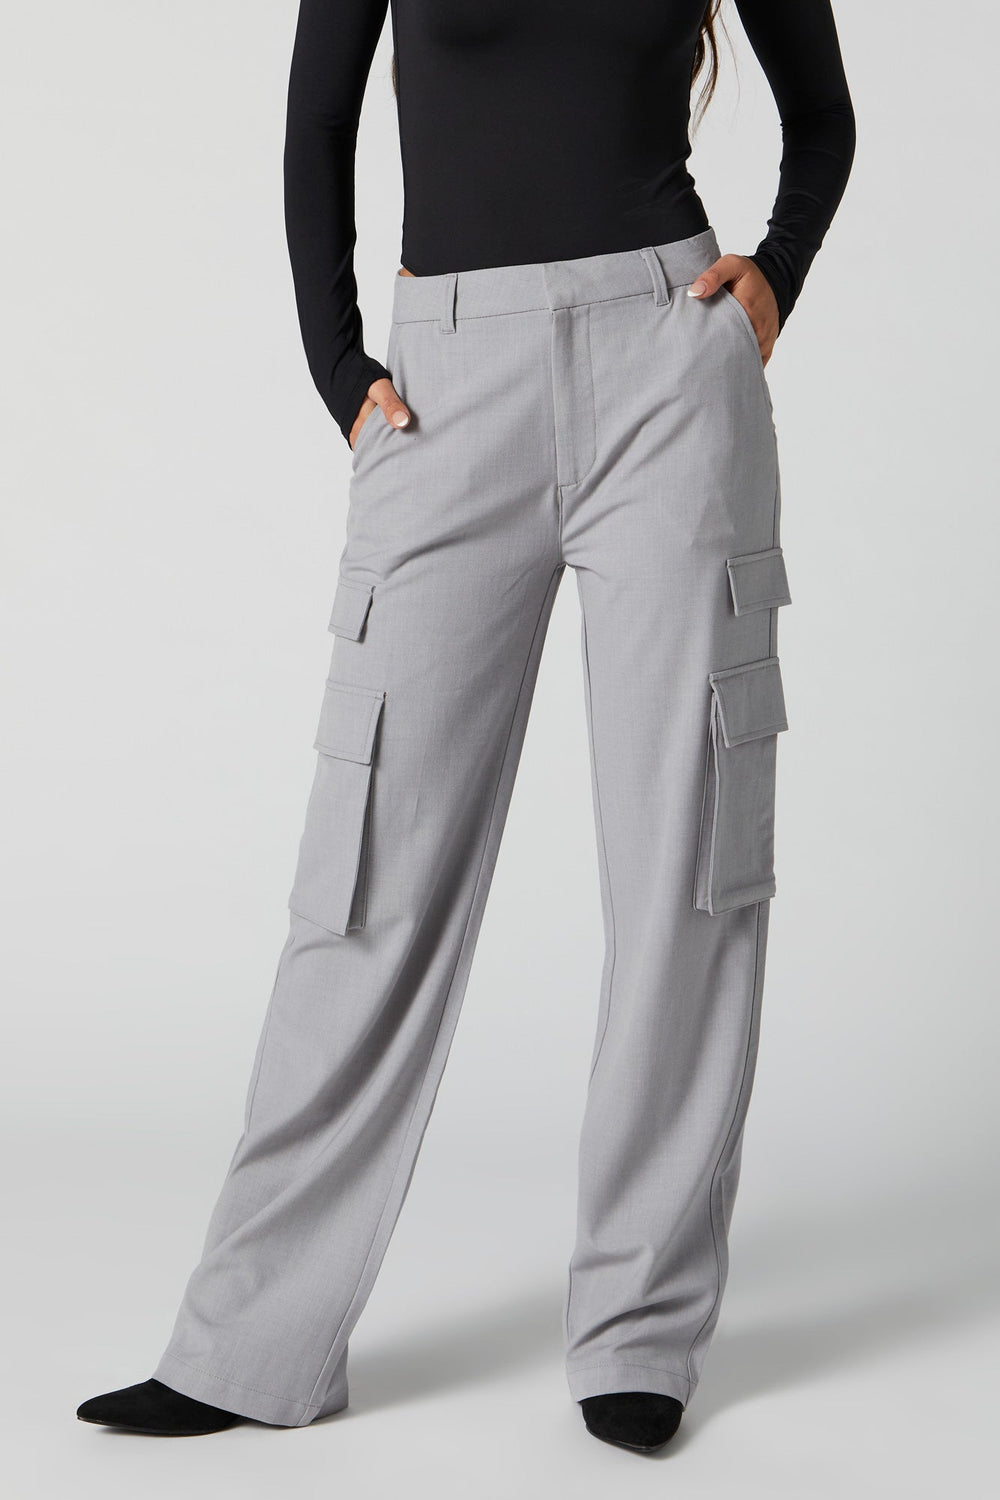 Grey Cargo Pocket Dress Pant Grey Cargo Pocket Dress Pant 2